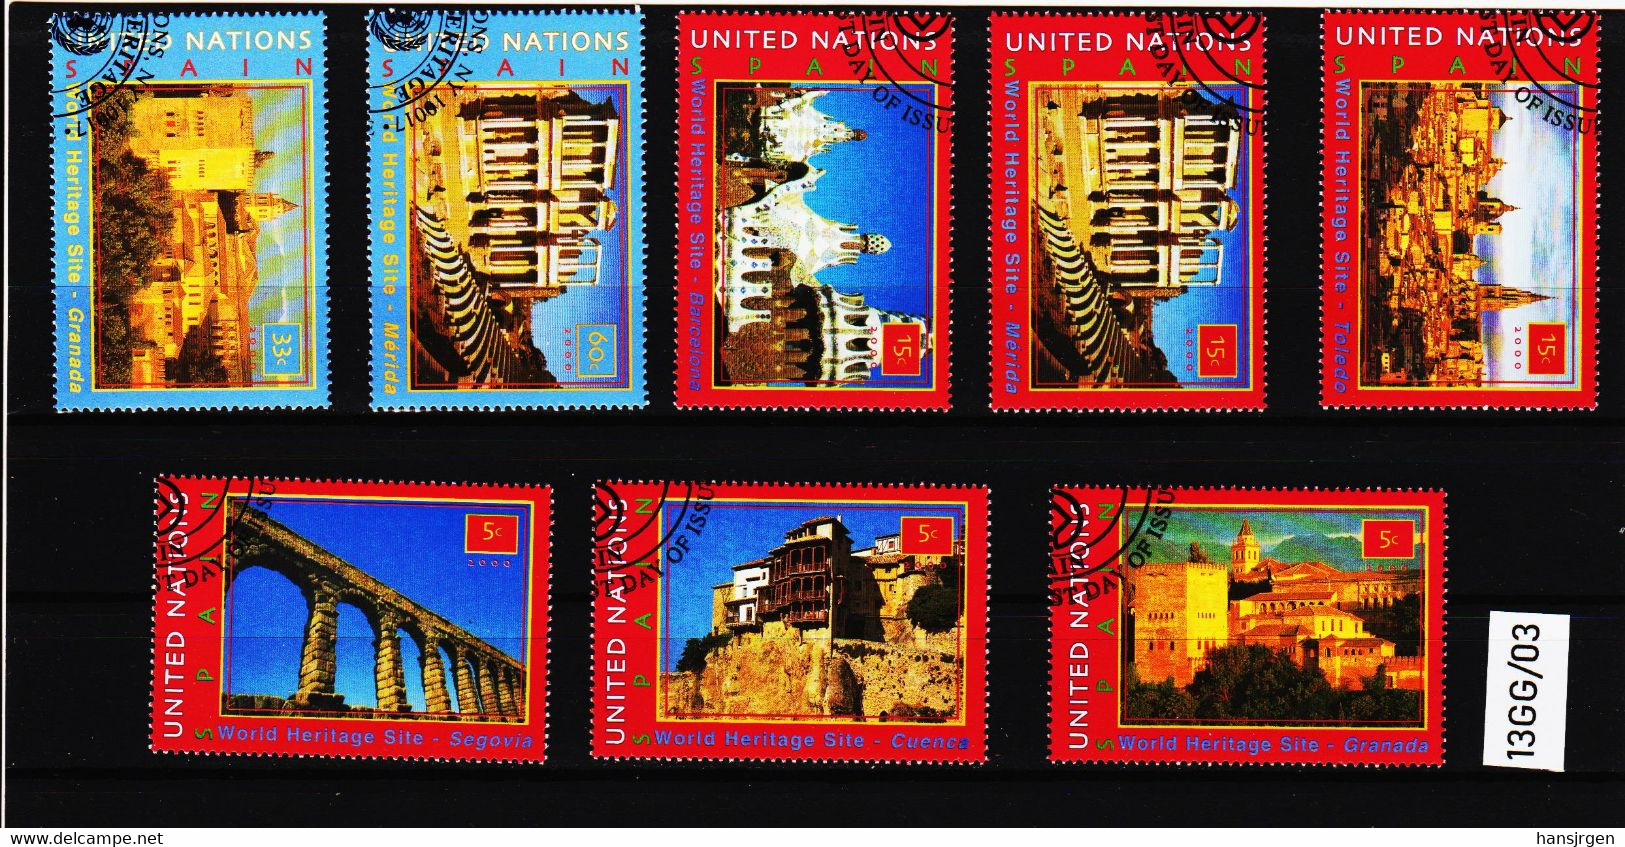 13GG/03 VEREINTE NATIONEN NEW YORK 2000  MICHL 846/47 + 848/53 Gestempelt Siehe ABBILBUNG - Used Stamps